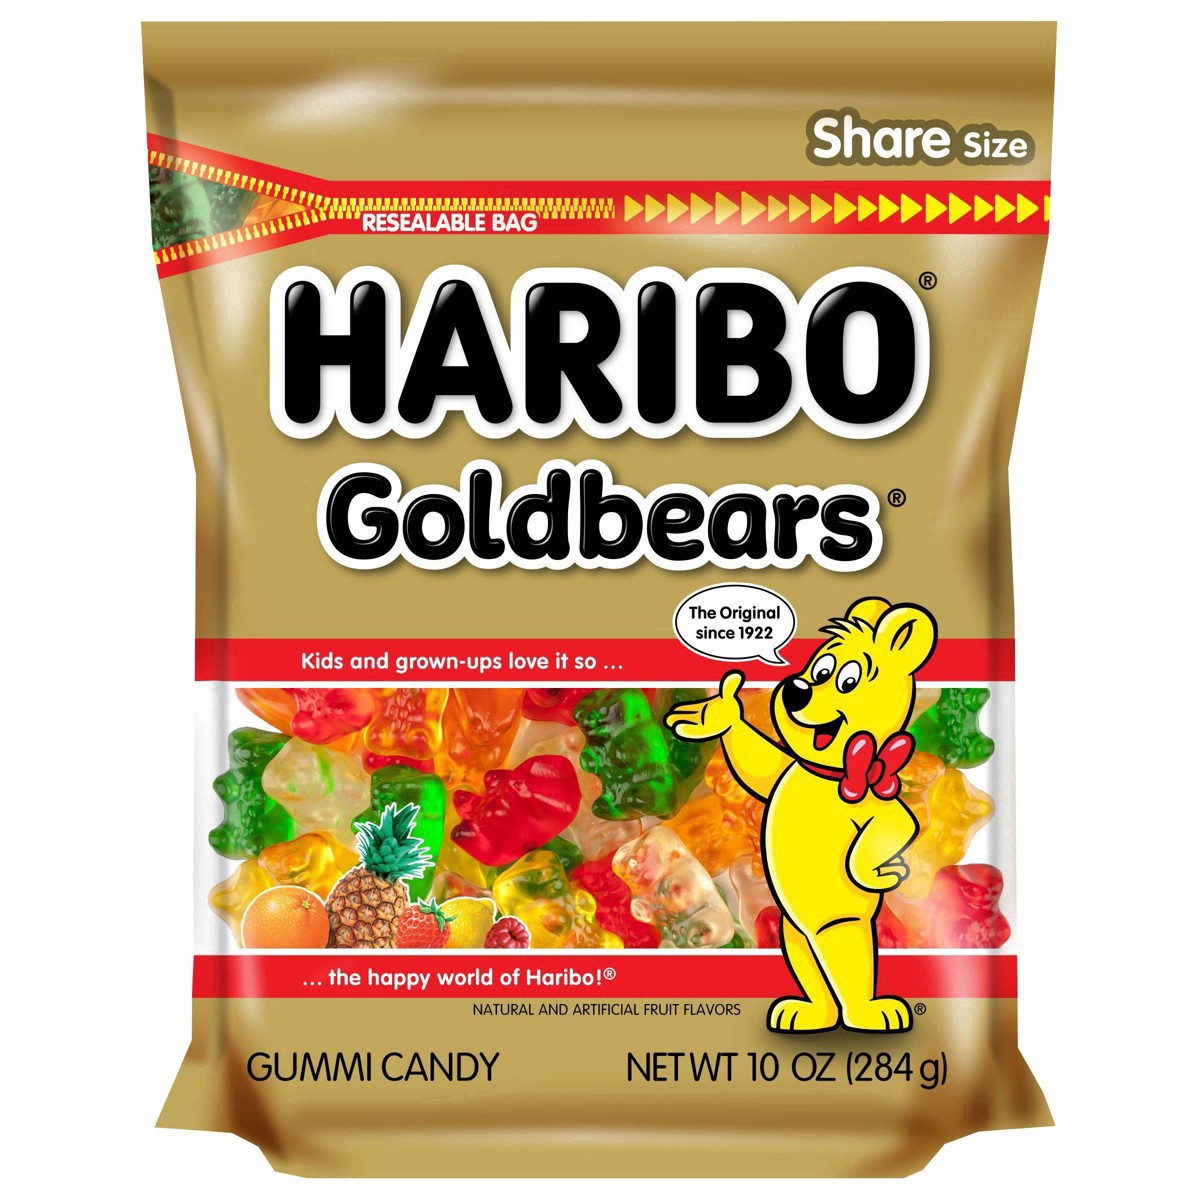 slide 11 of 22, Haribo Share Size Goldbears Gummi Candy 10 oz, 10 oz